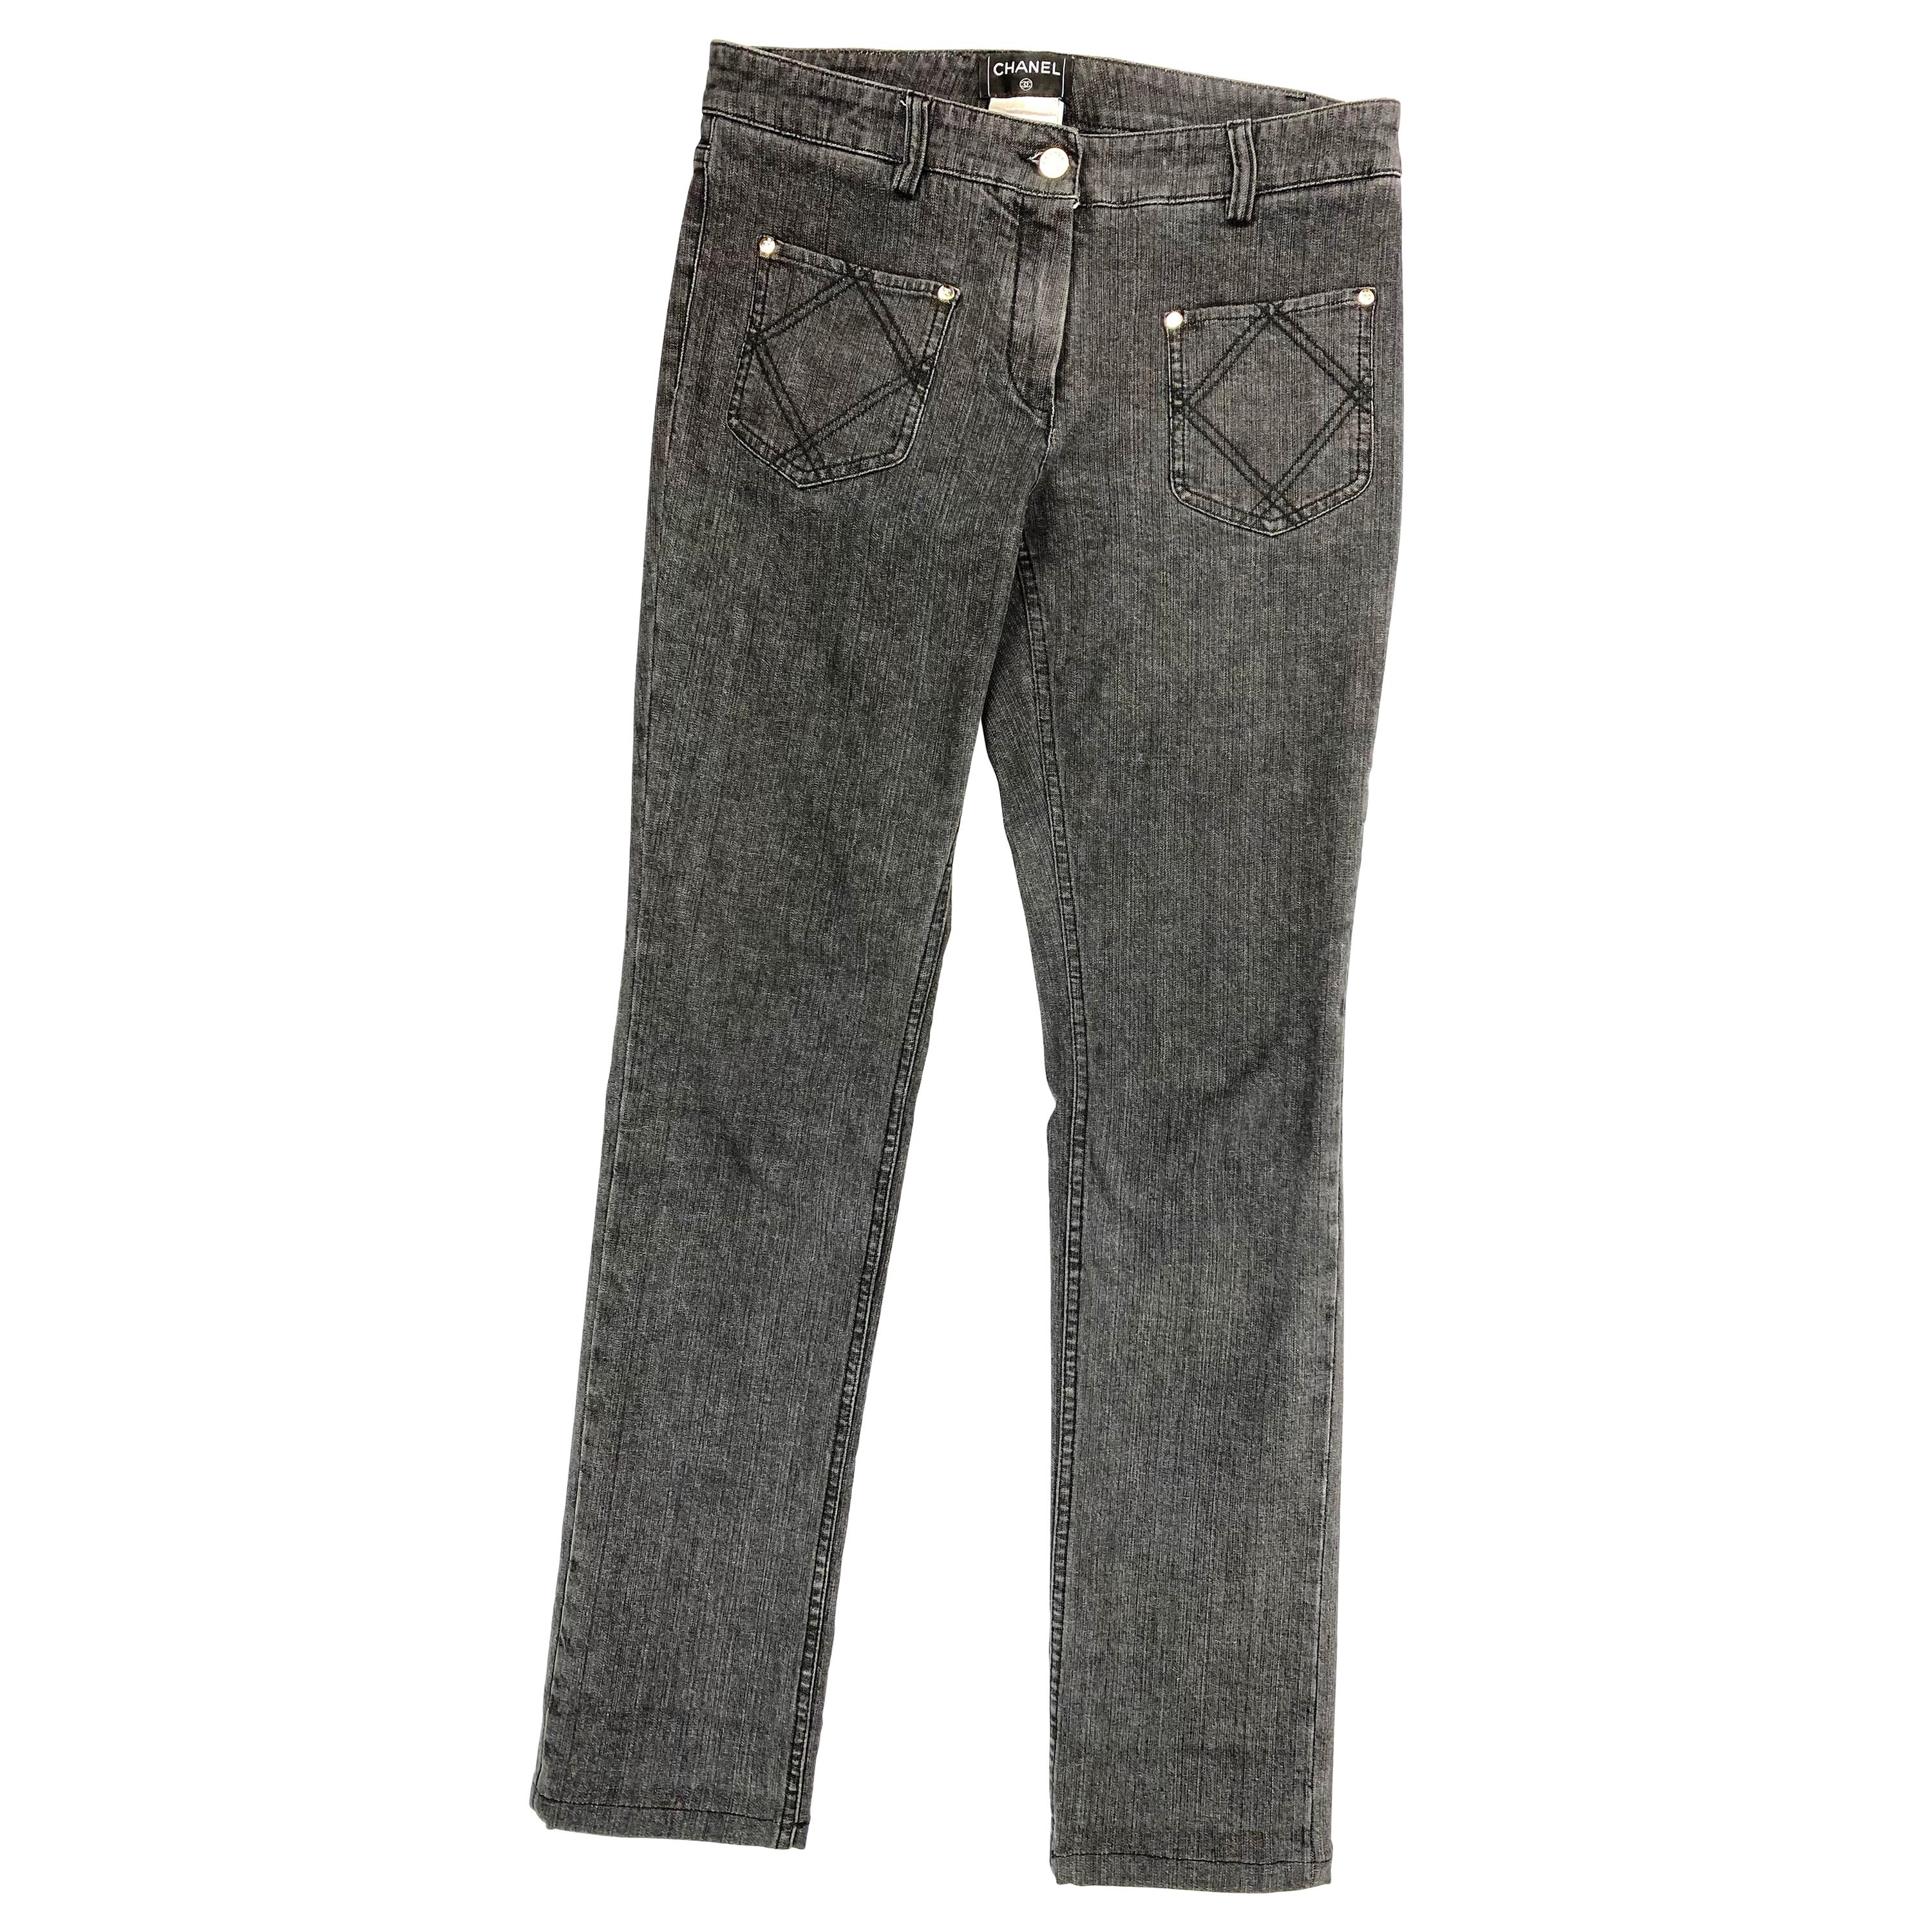 vintage chanel jeans